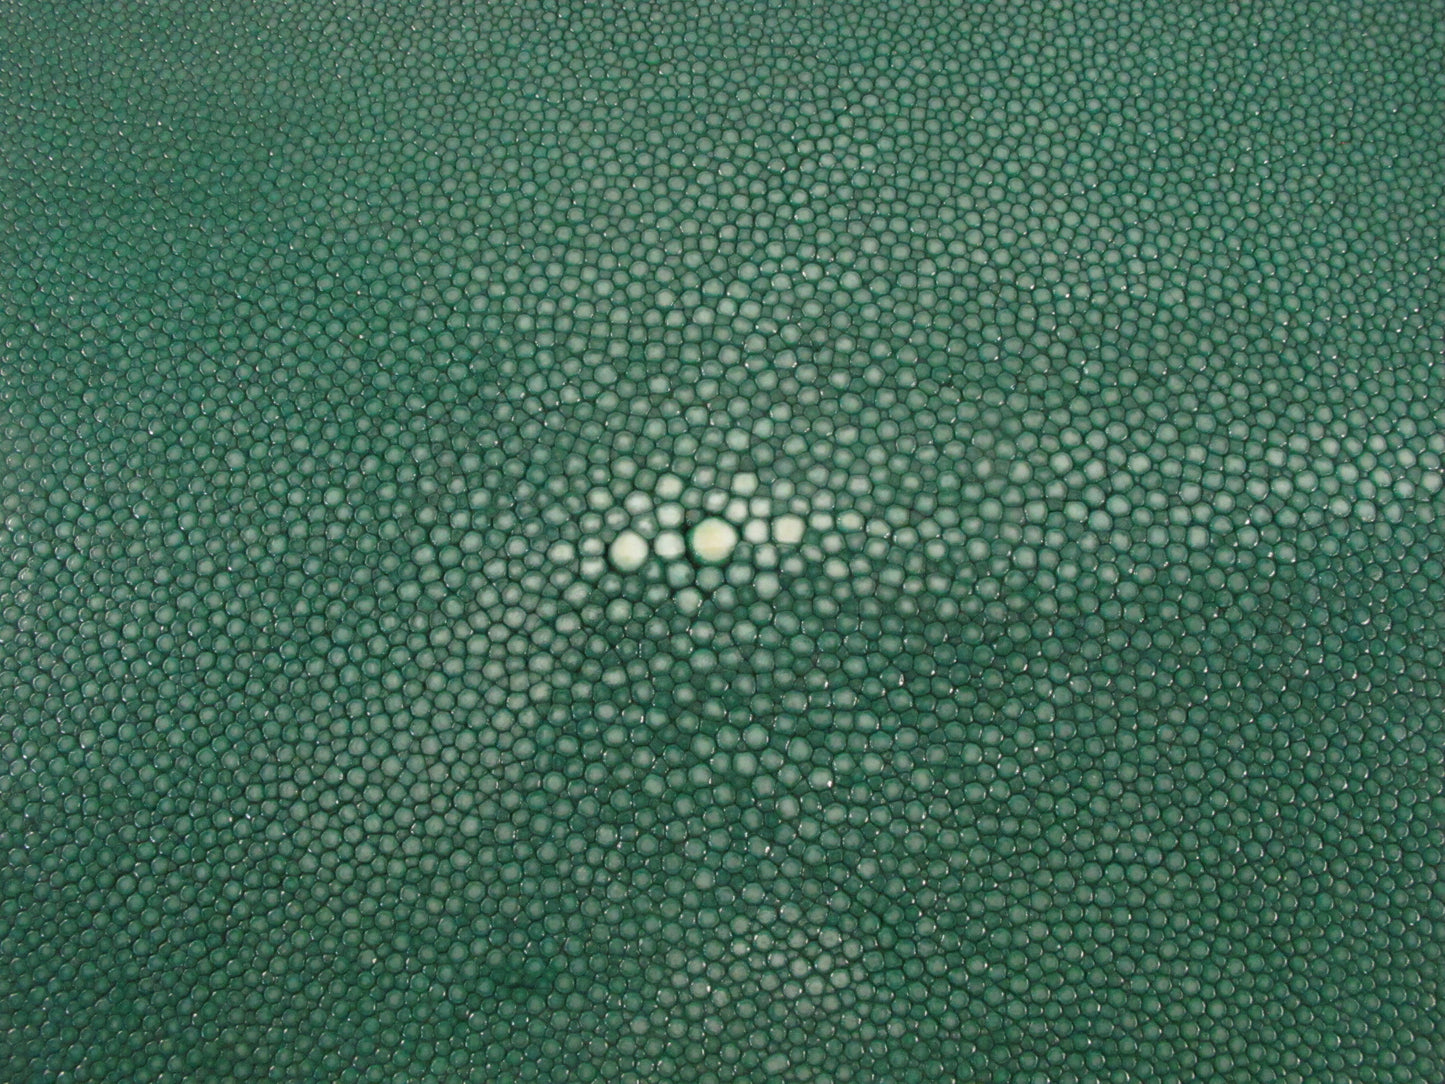 Genuine Polished Stingray Skin Leather Round Shape Hide Pelt Green